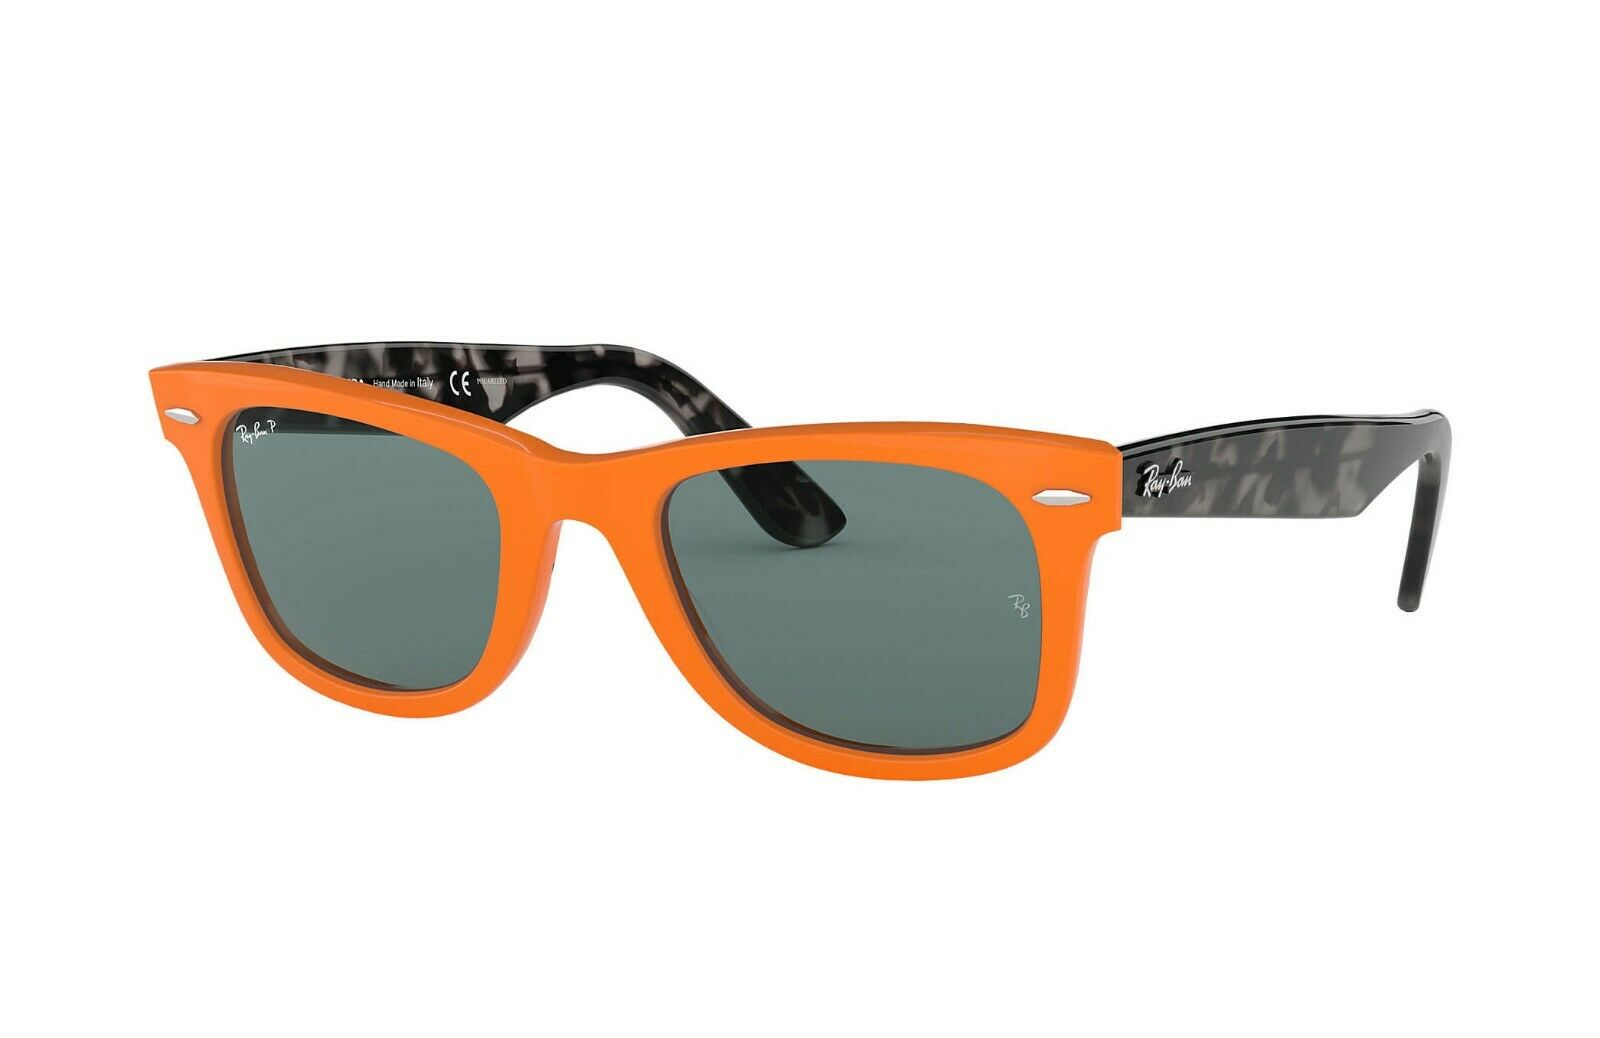 ray ban orange and blue sunglasses